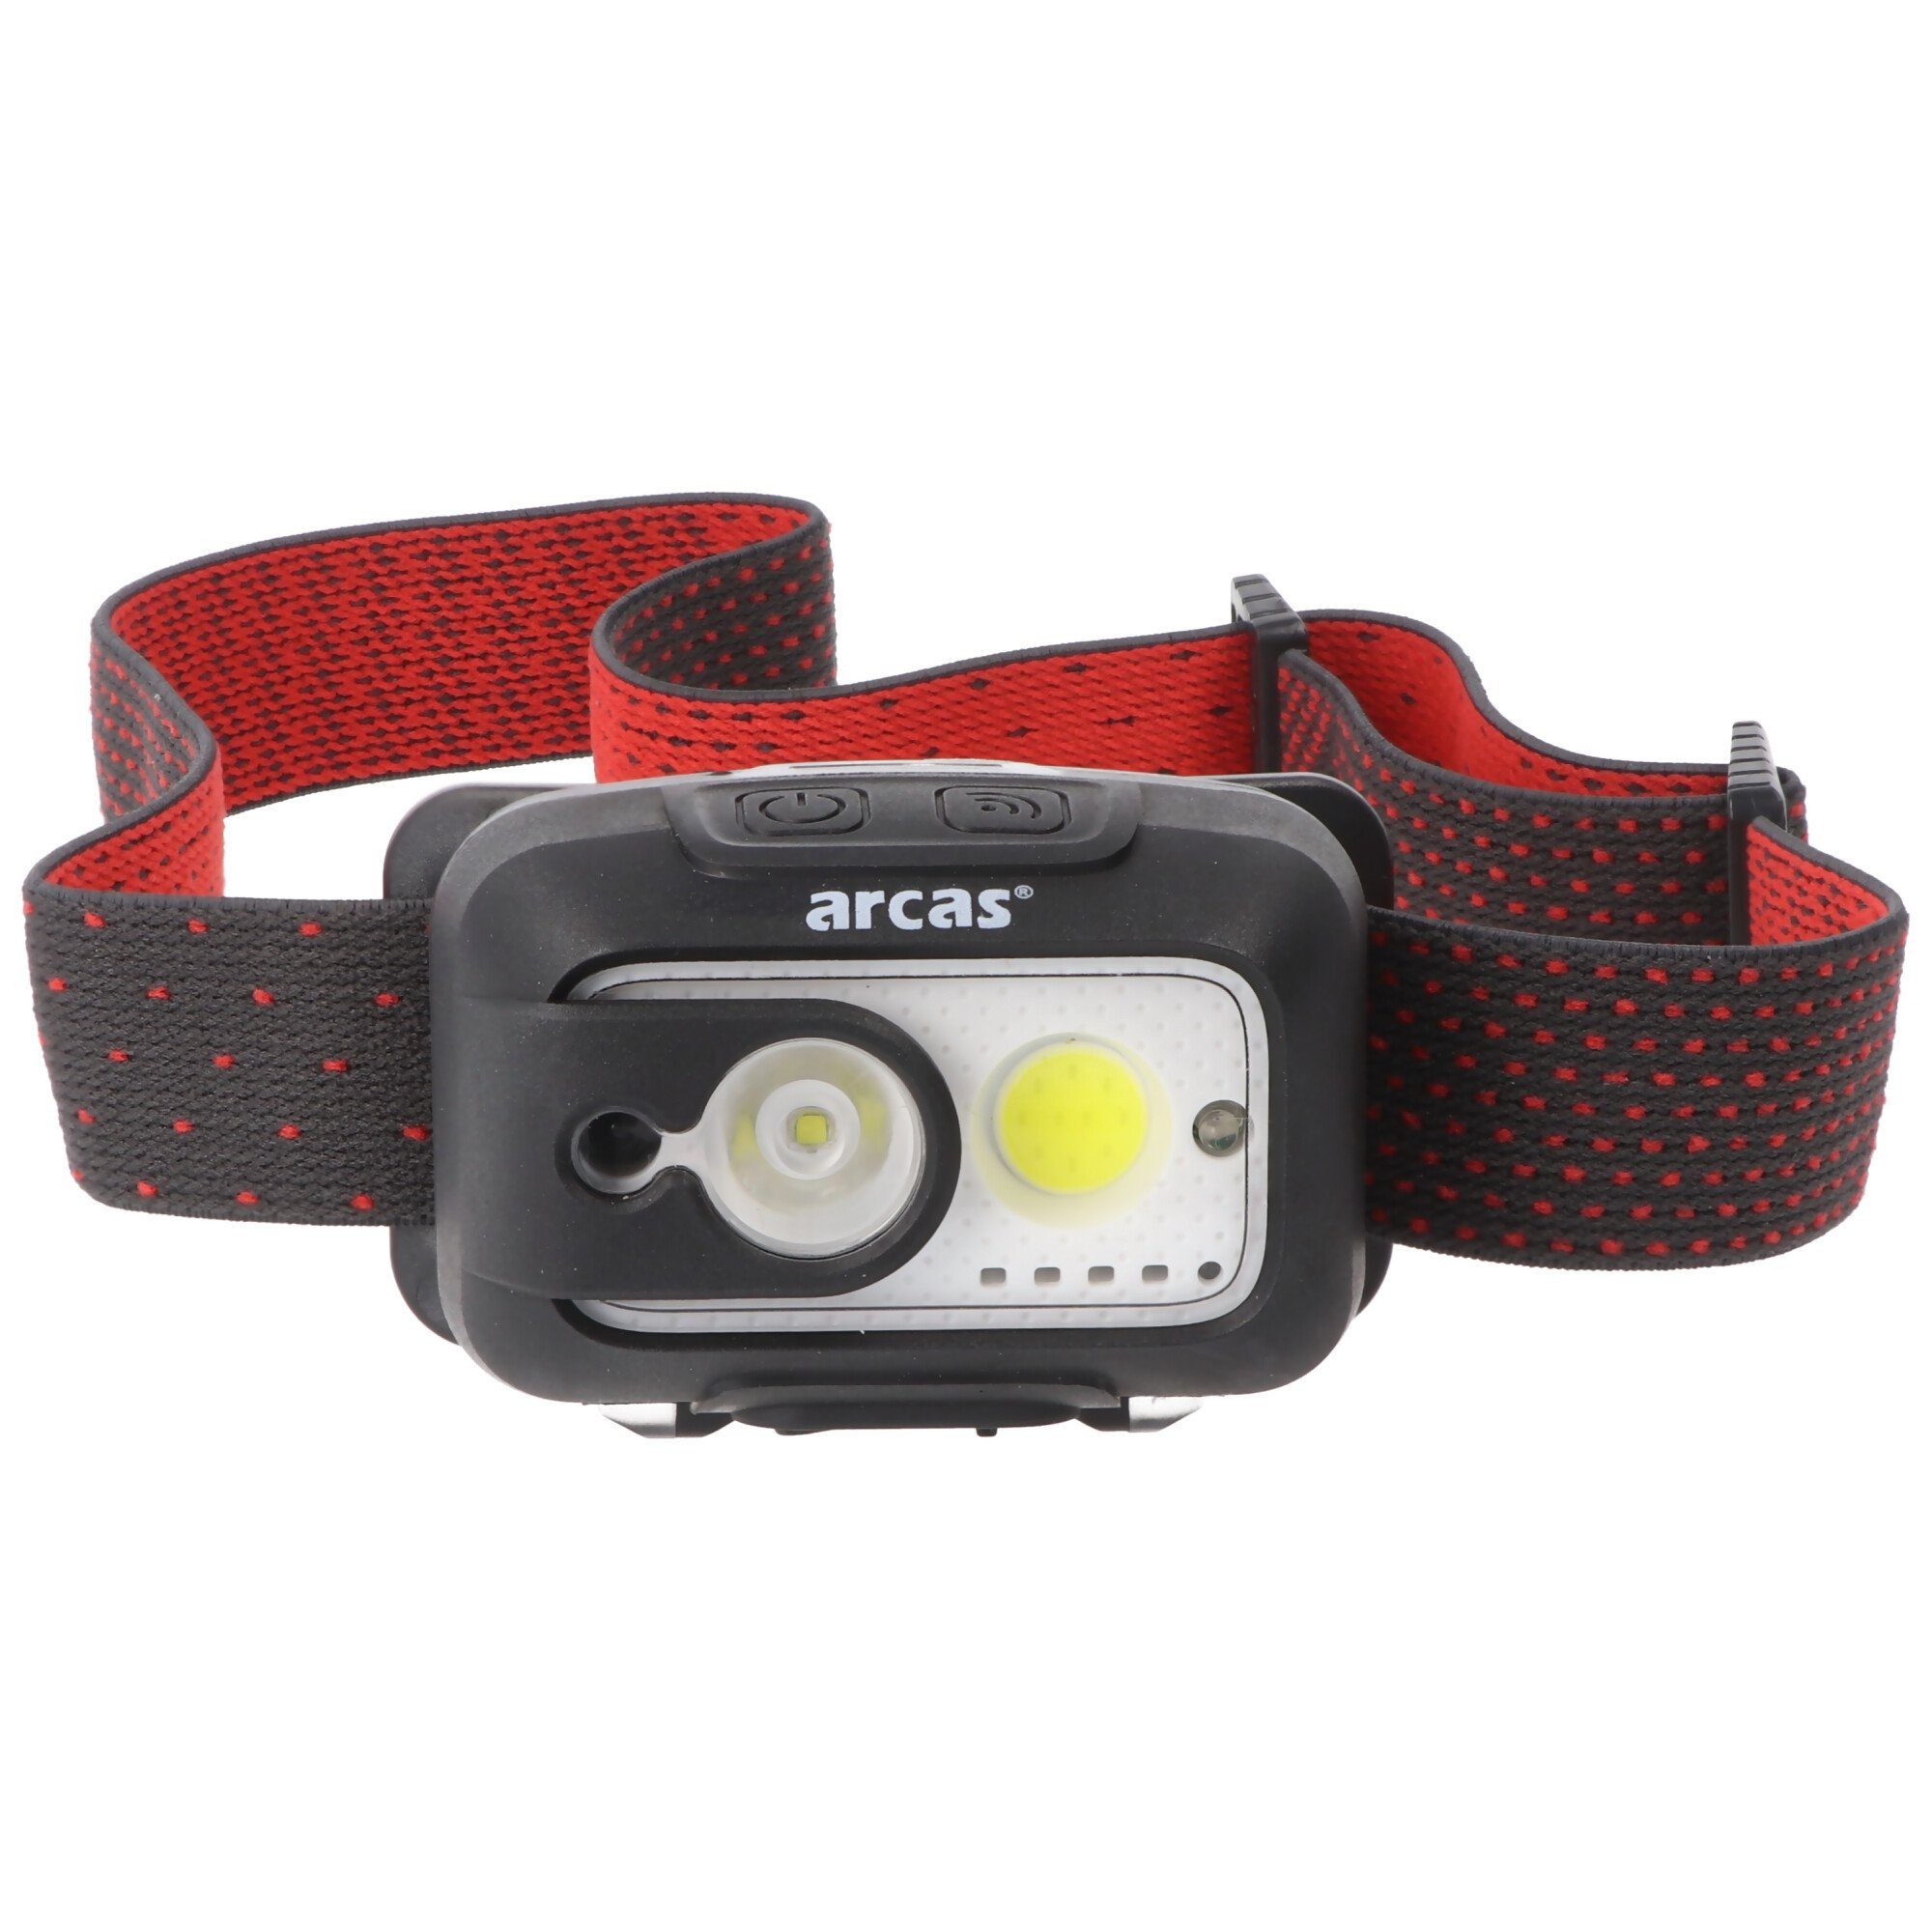 Sparpreis Arcas LED 9 Stirnlampe Beleuchtungsmodi, 6 Sensortaste 1 Watt LED Stirnlampe, Sensor drücken: Kopflampe, Nylon-Ko, an, LEDs beide mal